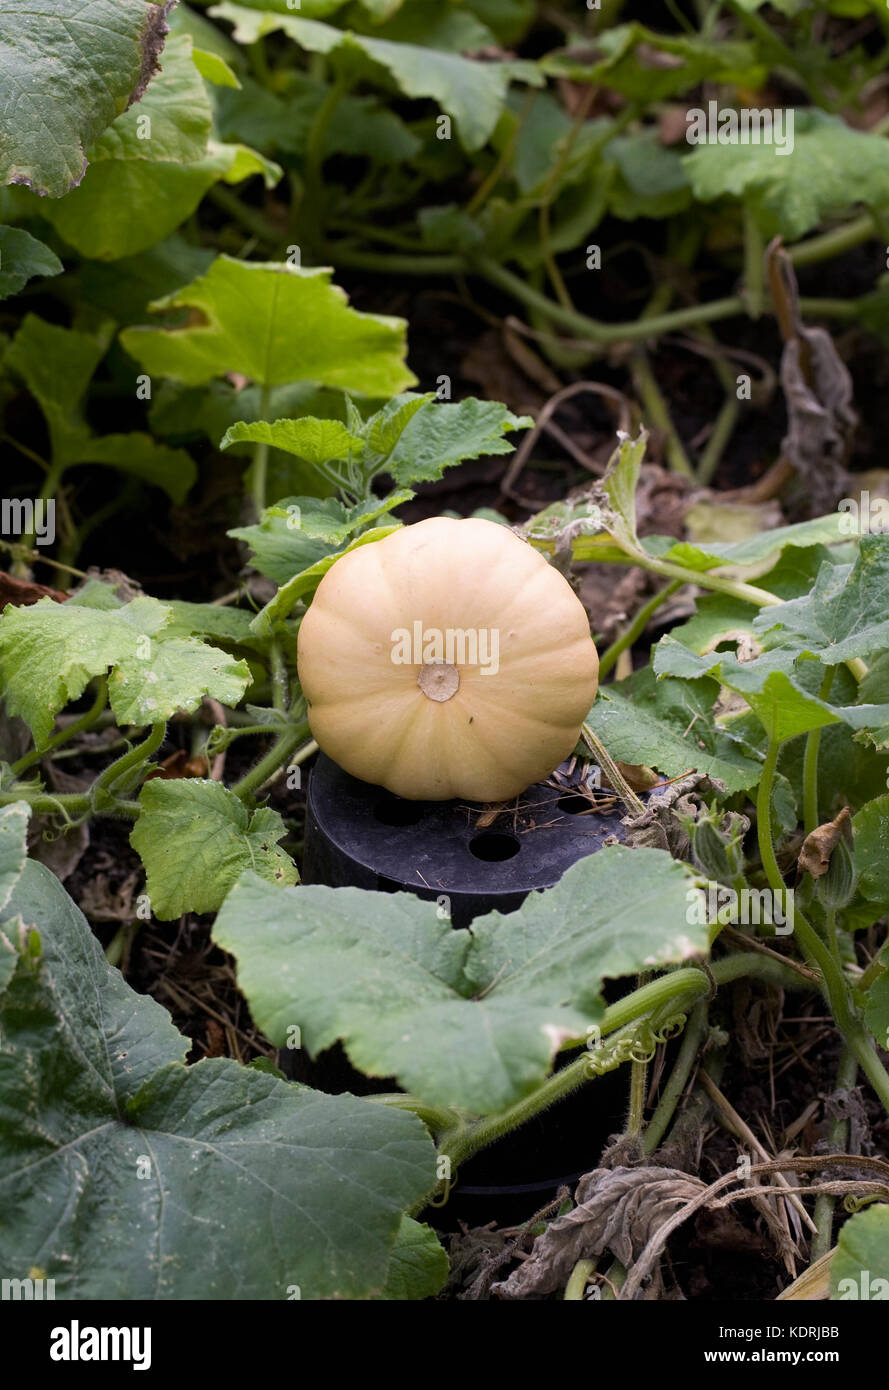 Curcubita pepo. Pumpkin raised off the ground to ripen. Stock Photo